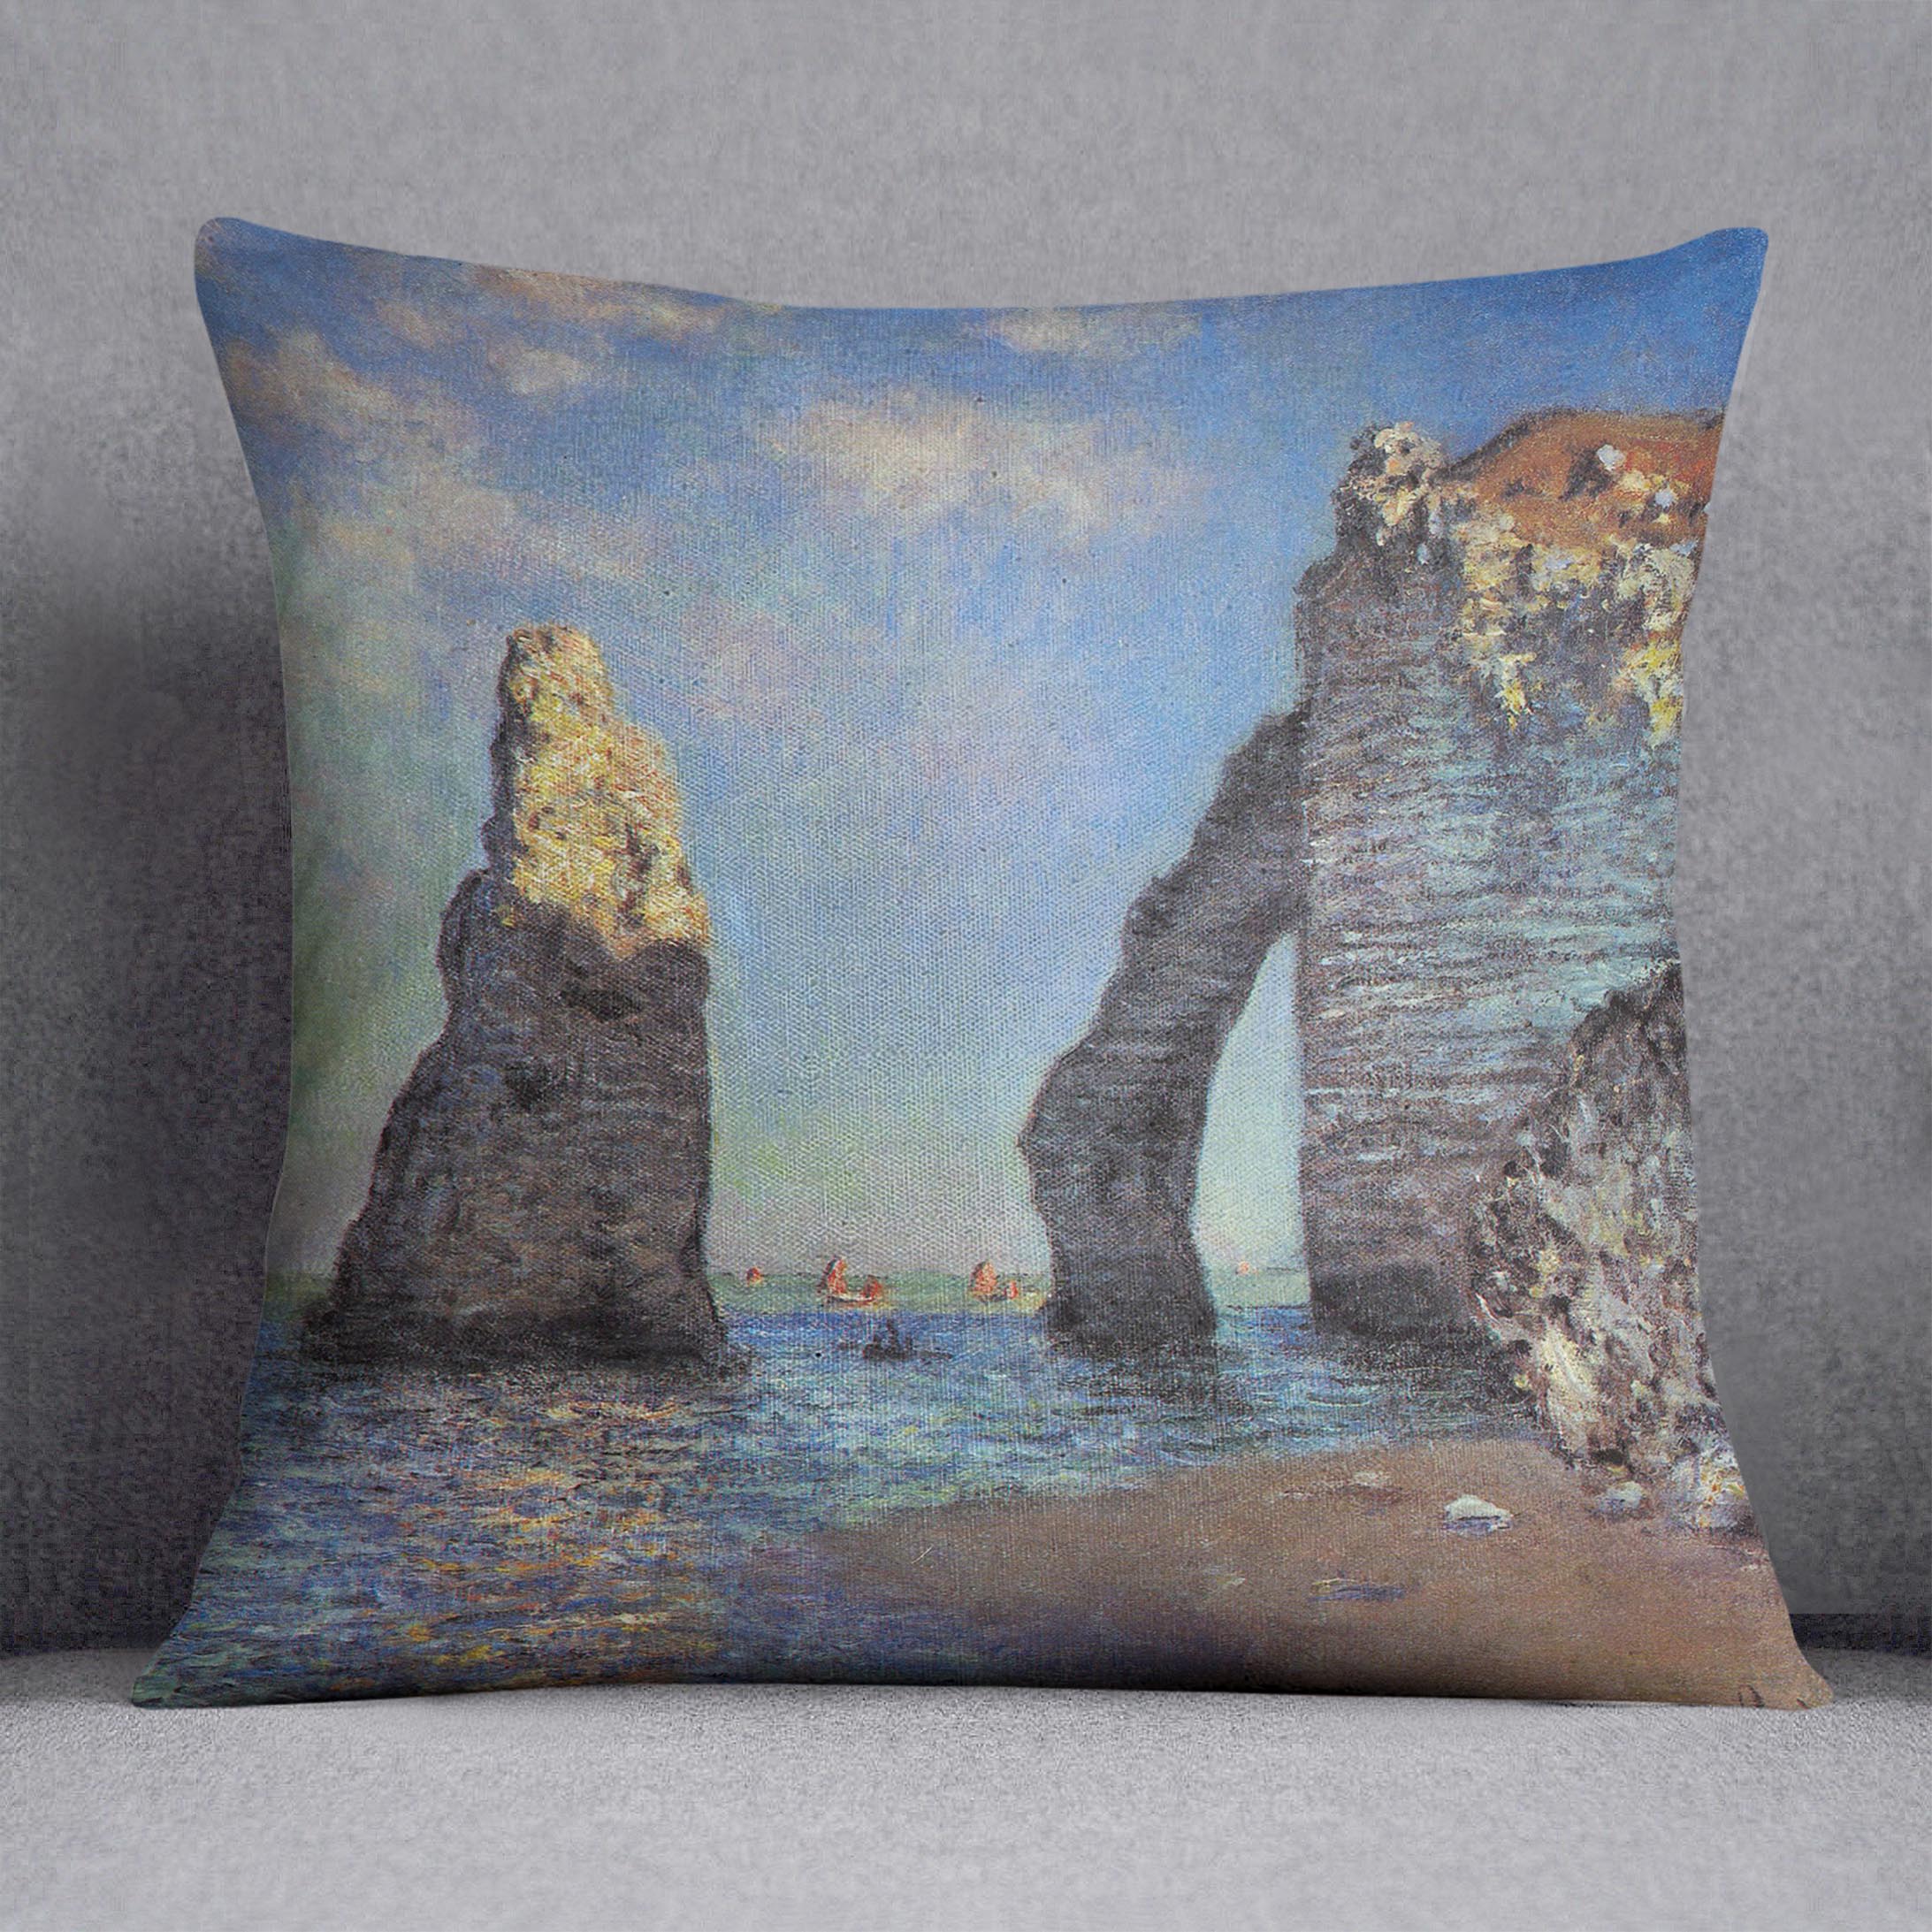 The rocky cliffs of etretat by Monet Cushion